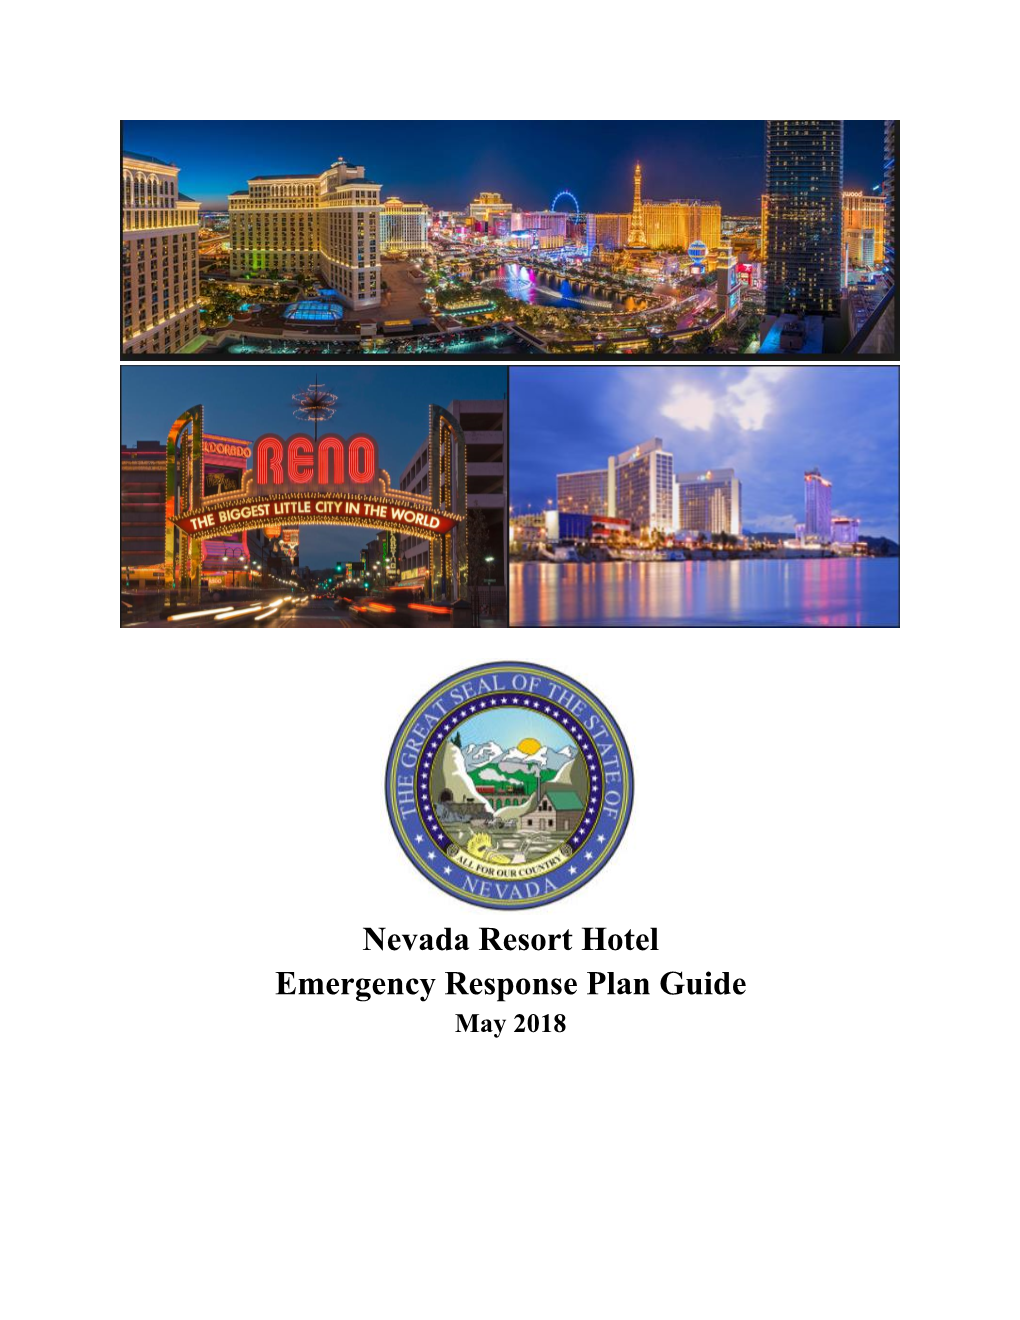 Nevada Resort Hotel Emergency Response Plan Guide May 2018